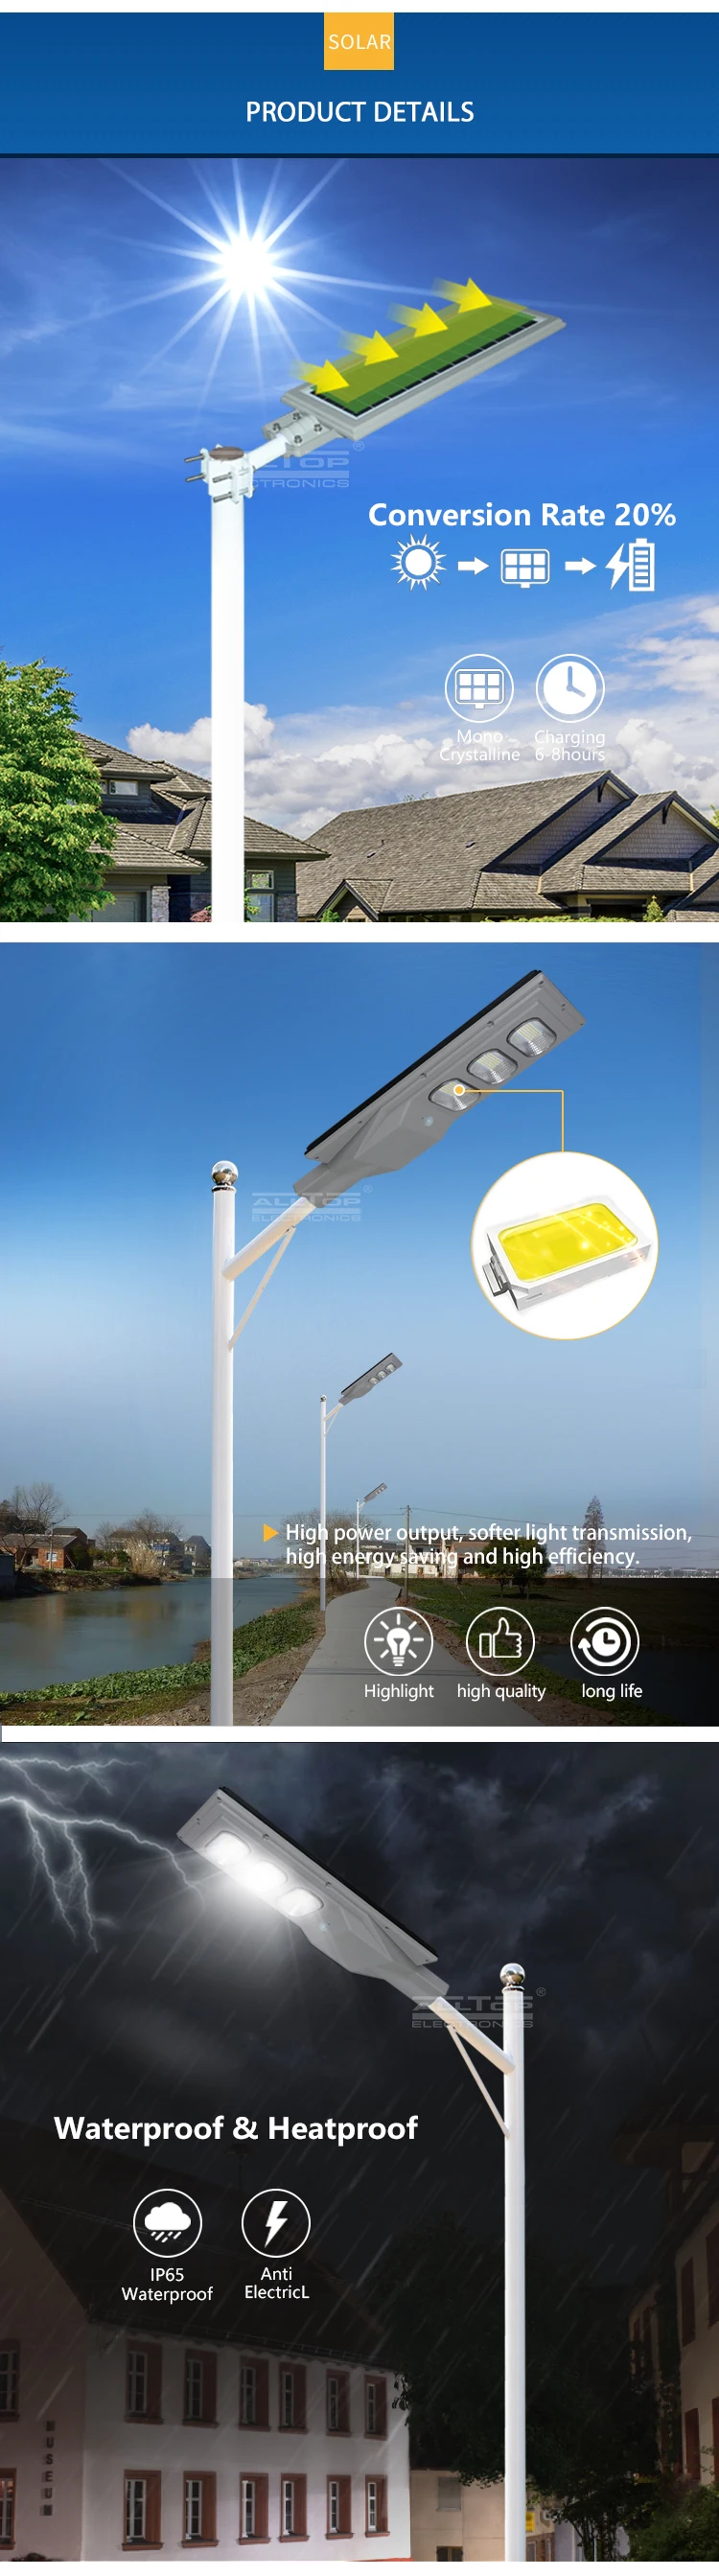 ALLTOP High quality ip65 waterproof outdoor panel battery 30 60 90 120 150 watt all in one solar led streetlight